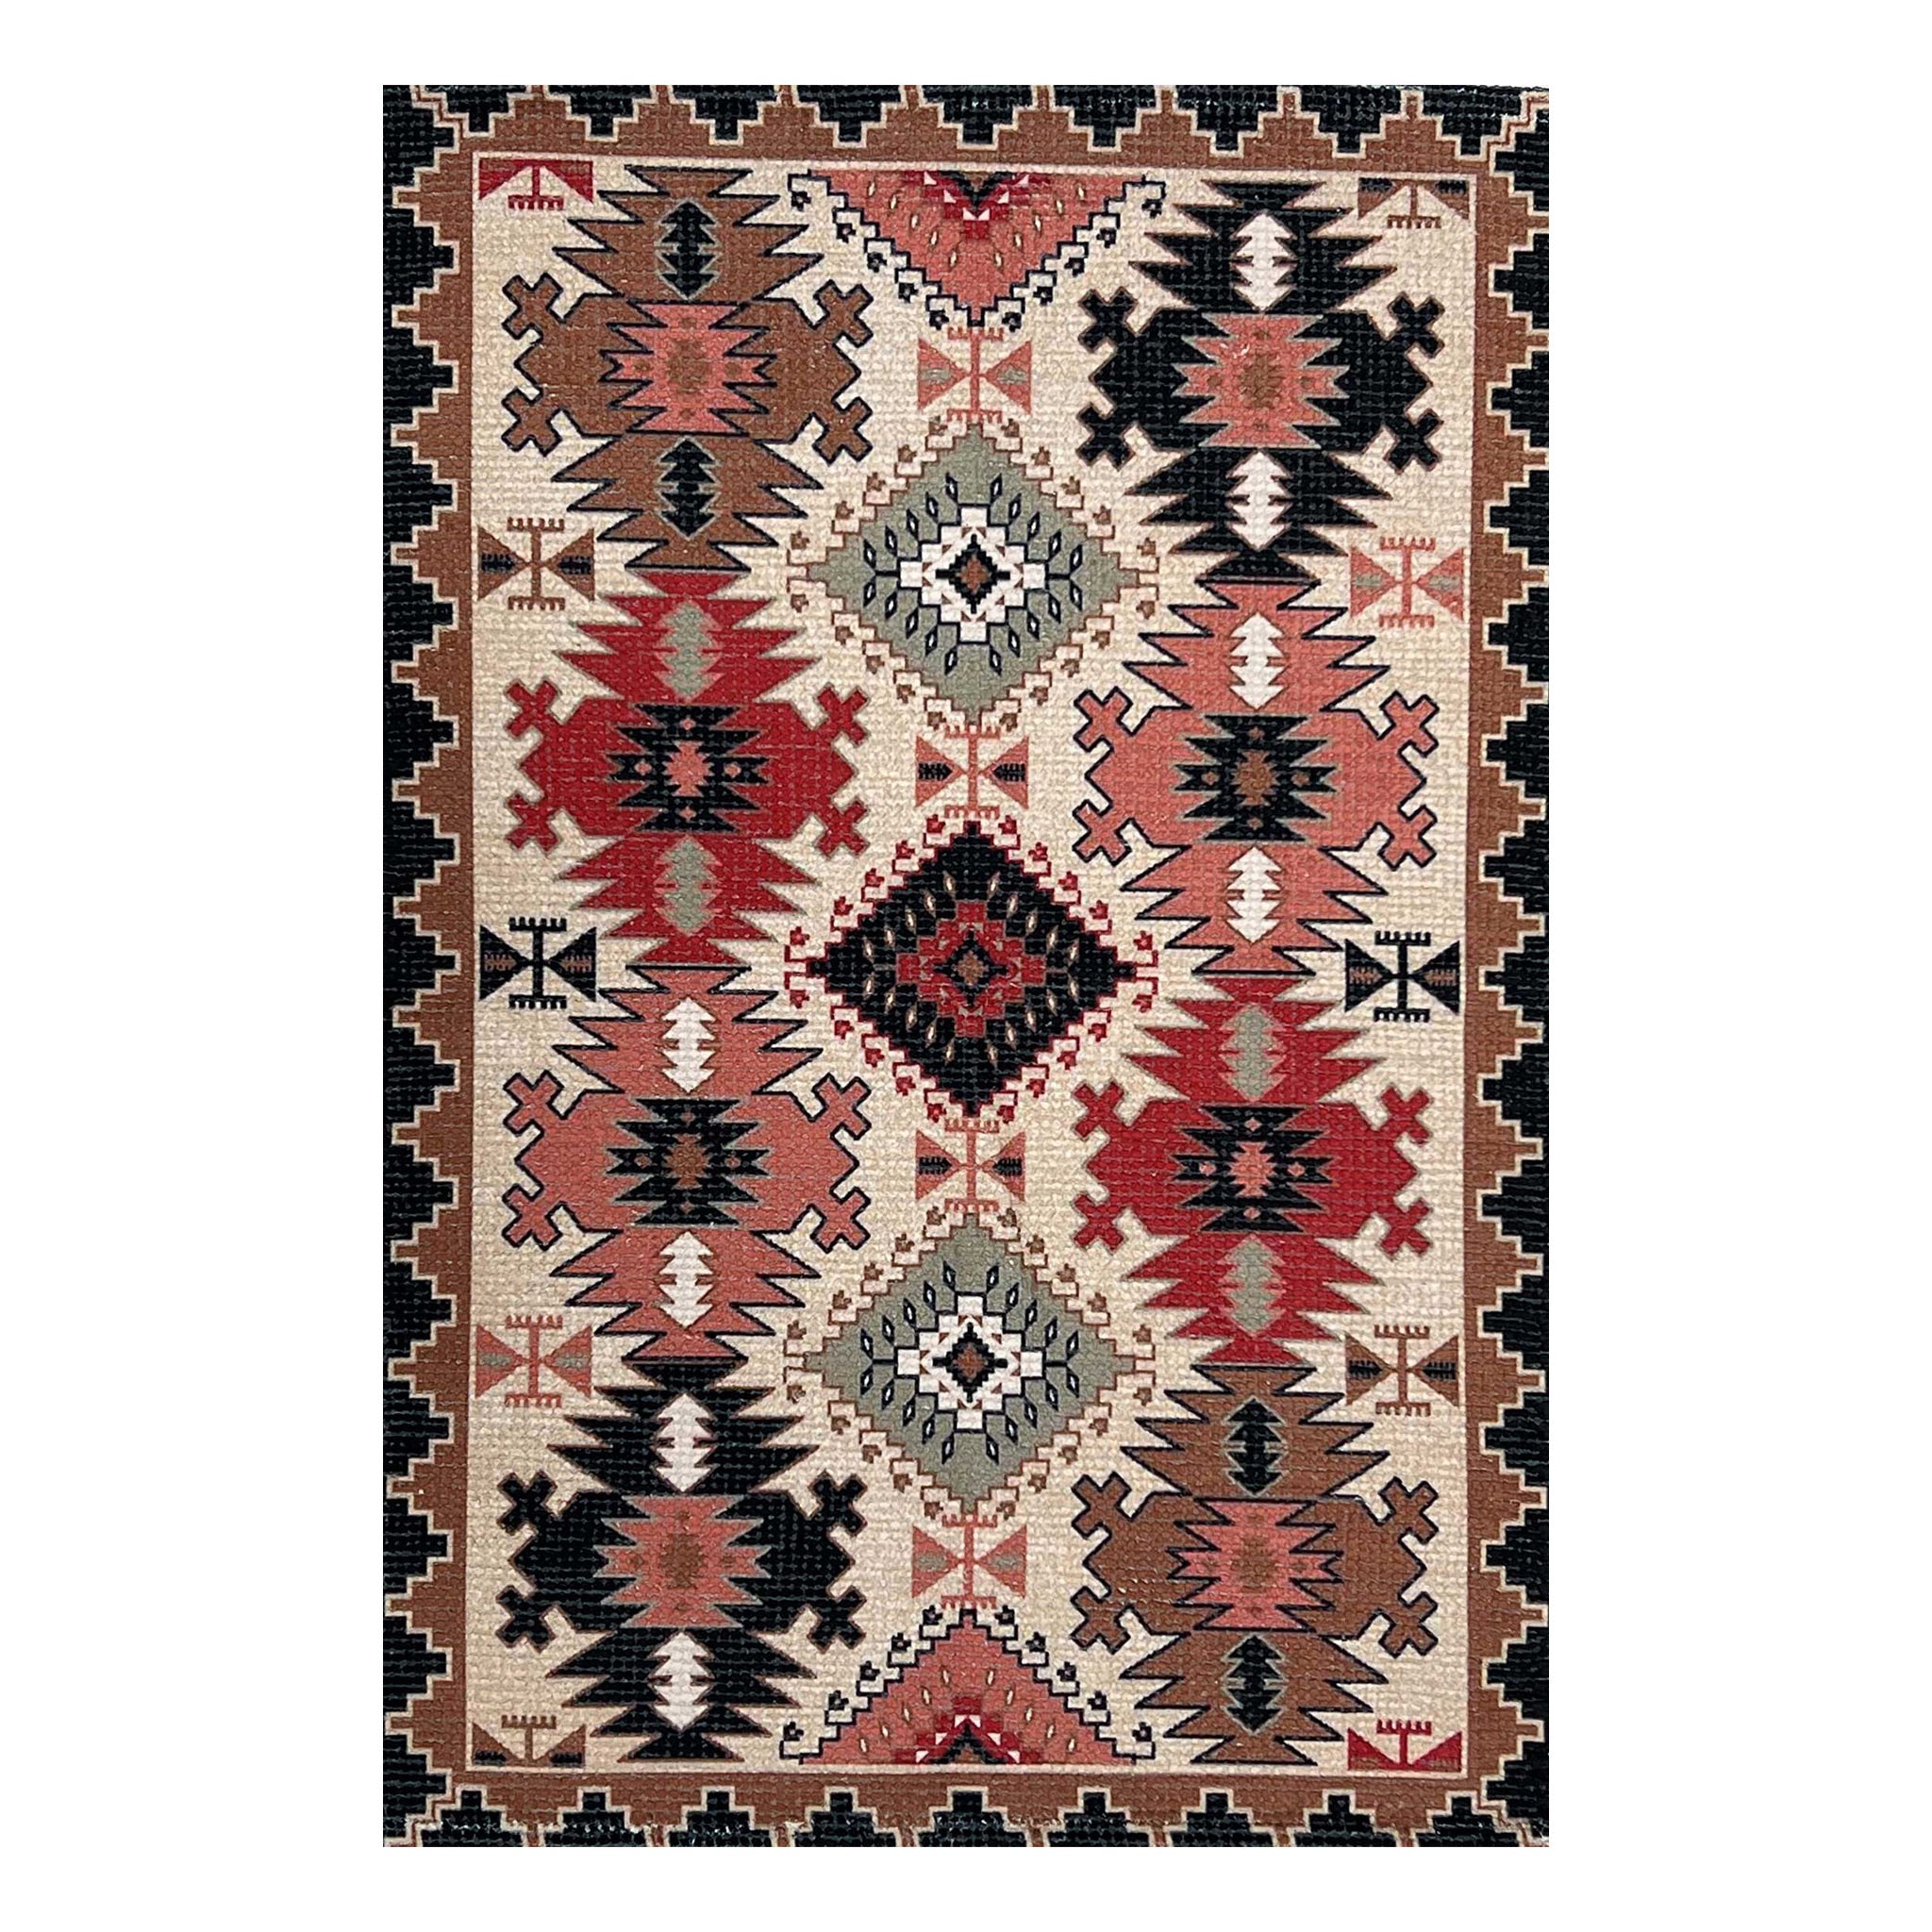 Mona B Printed Vintage Dhurrie Carpet Rug Runner Floor Mat for Living Room Bedroom: 3.5 X 5.5 Feet Multi Color - PR-112 (4266)